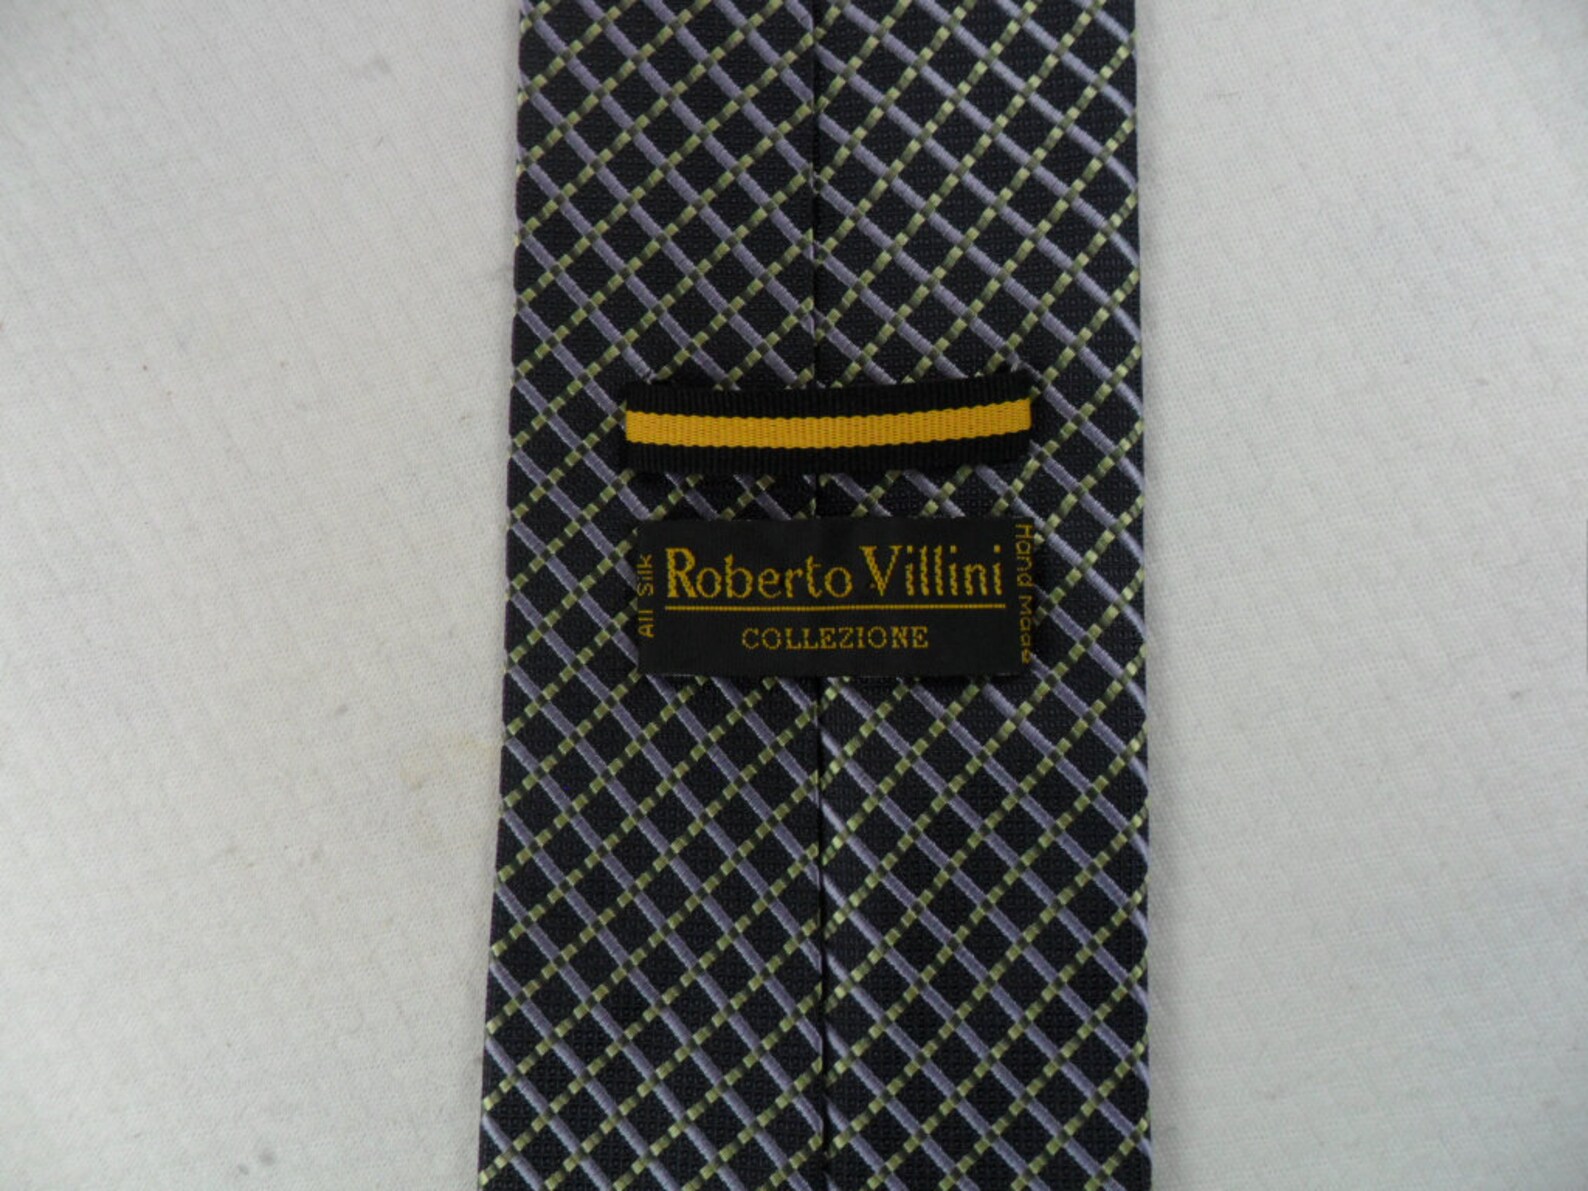 Vintage Roberto Villini Collezione Tie Hand Made Pure Silk - Etsy